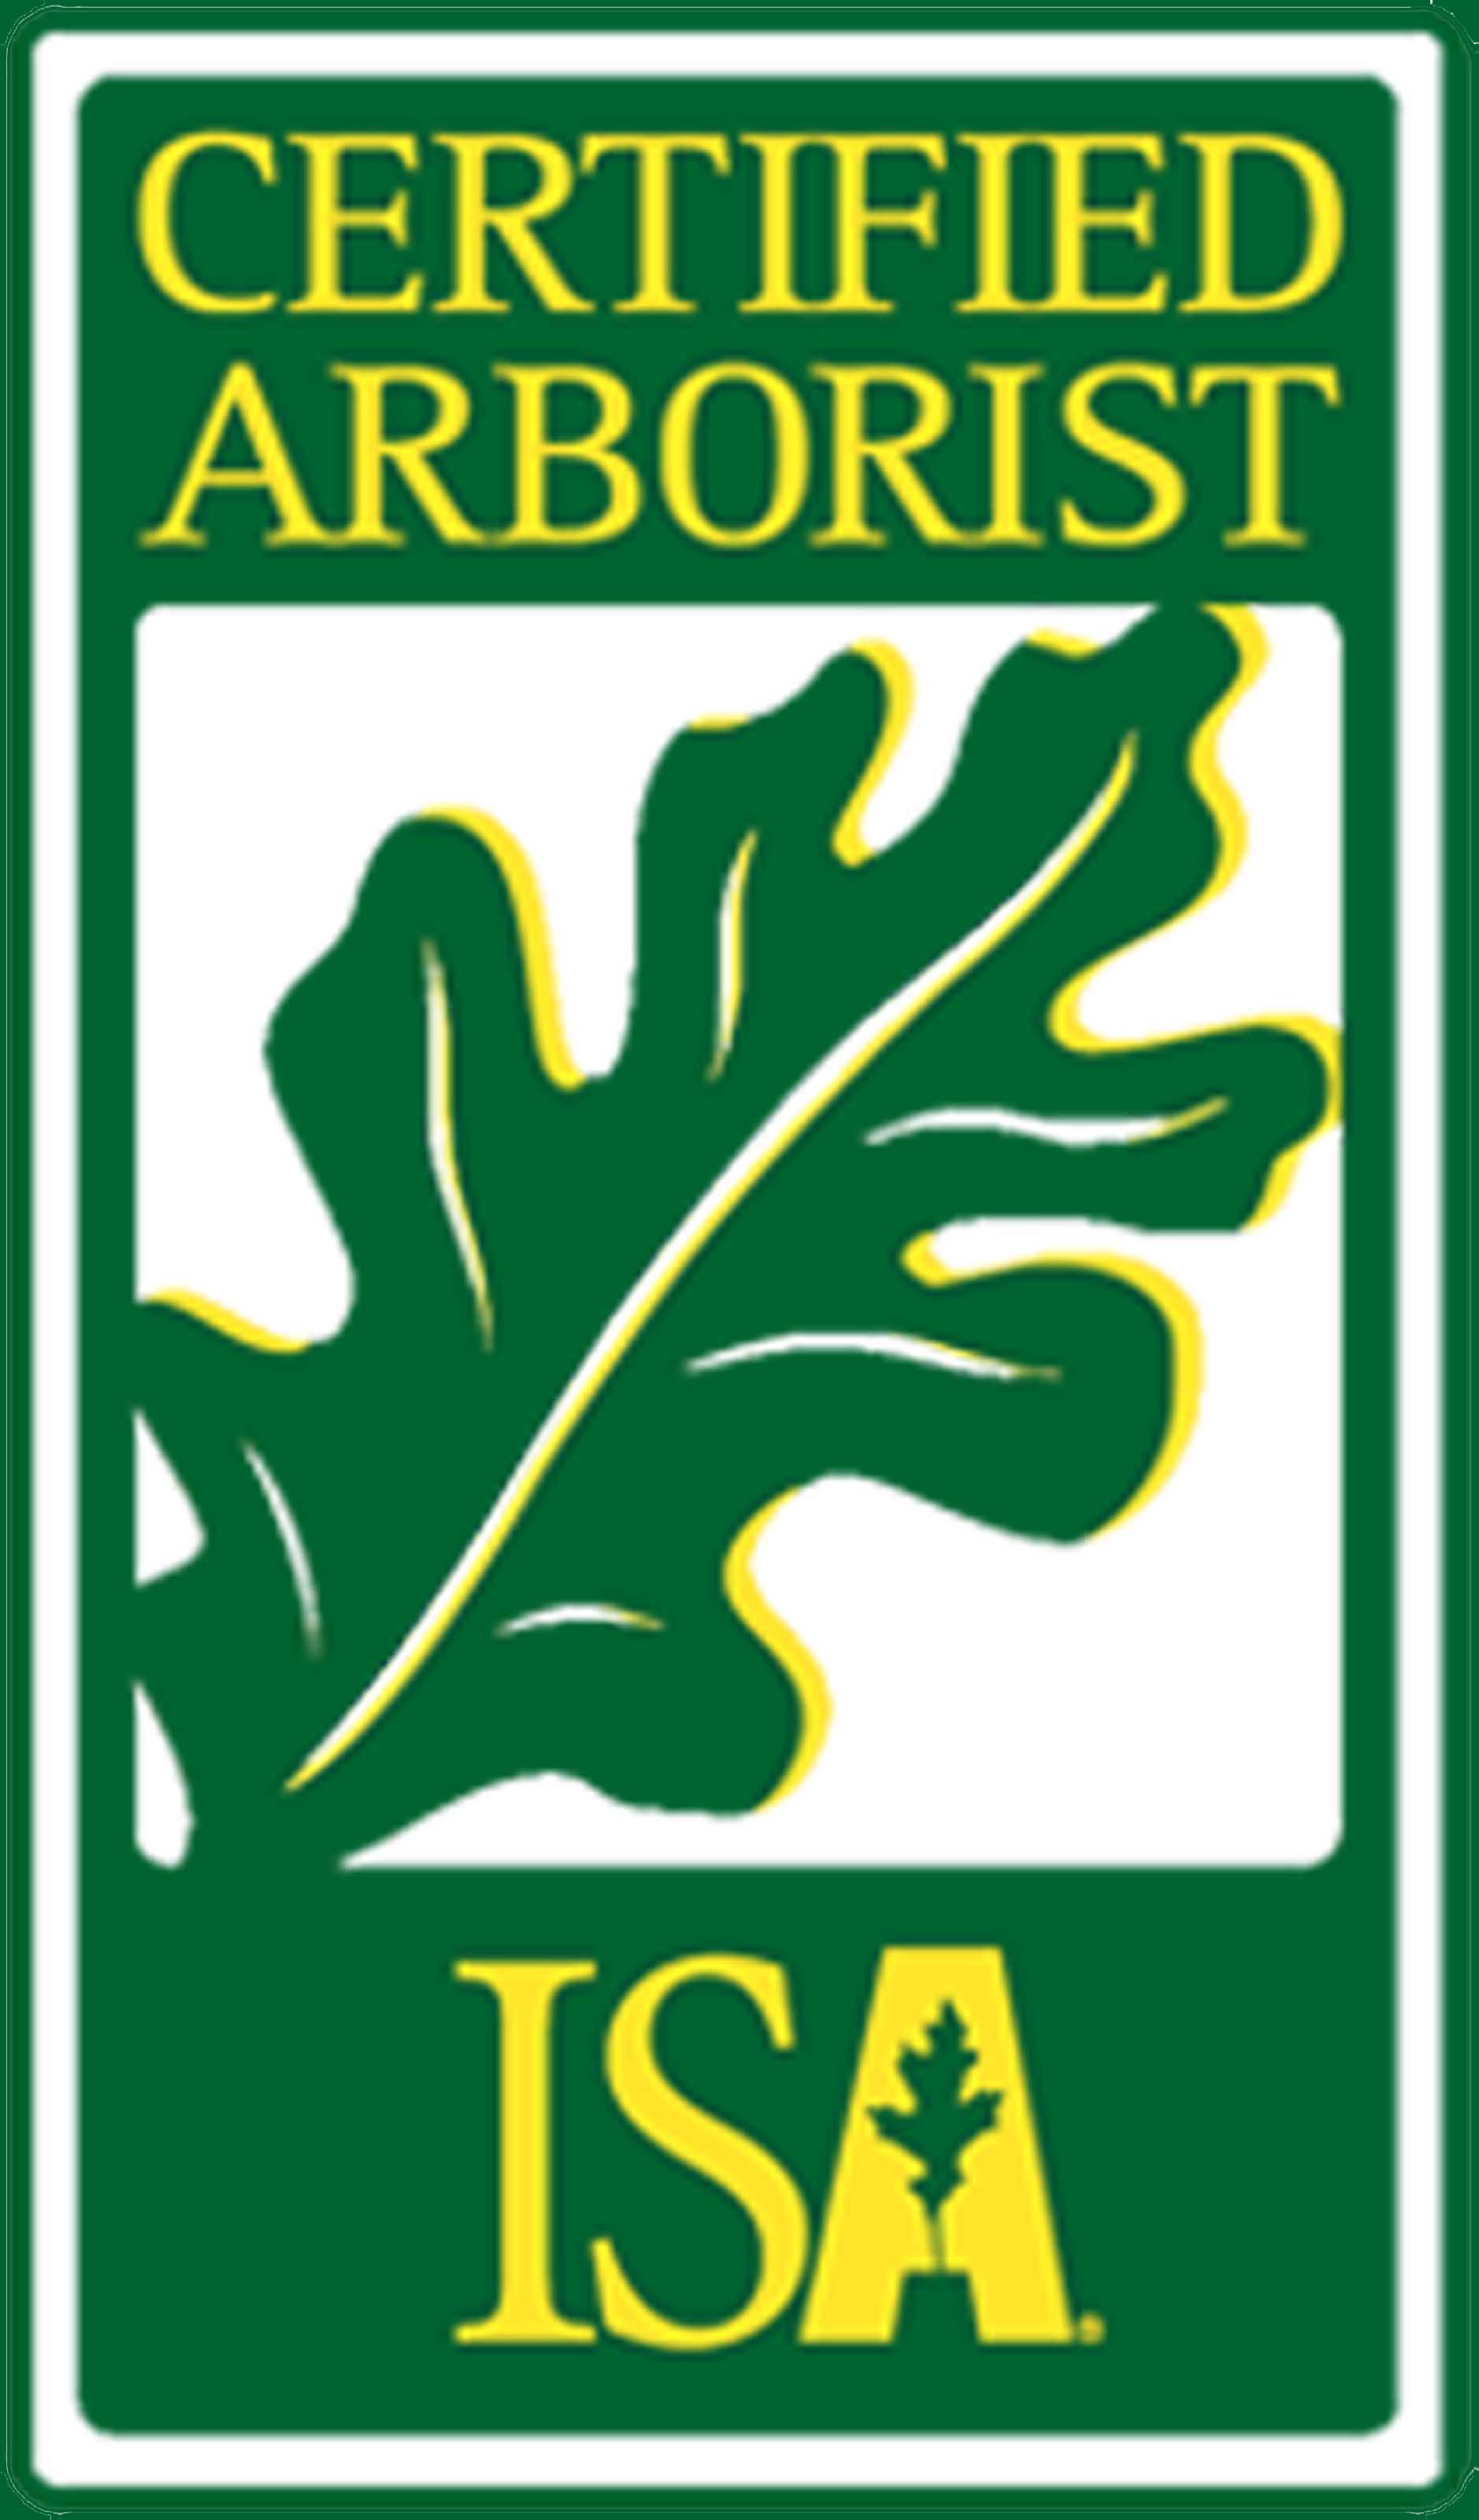 Certified Arborist - International Society of Arboriculture